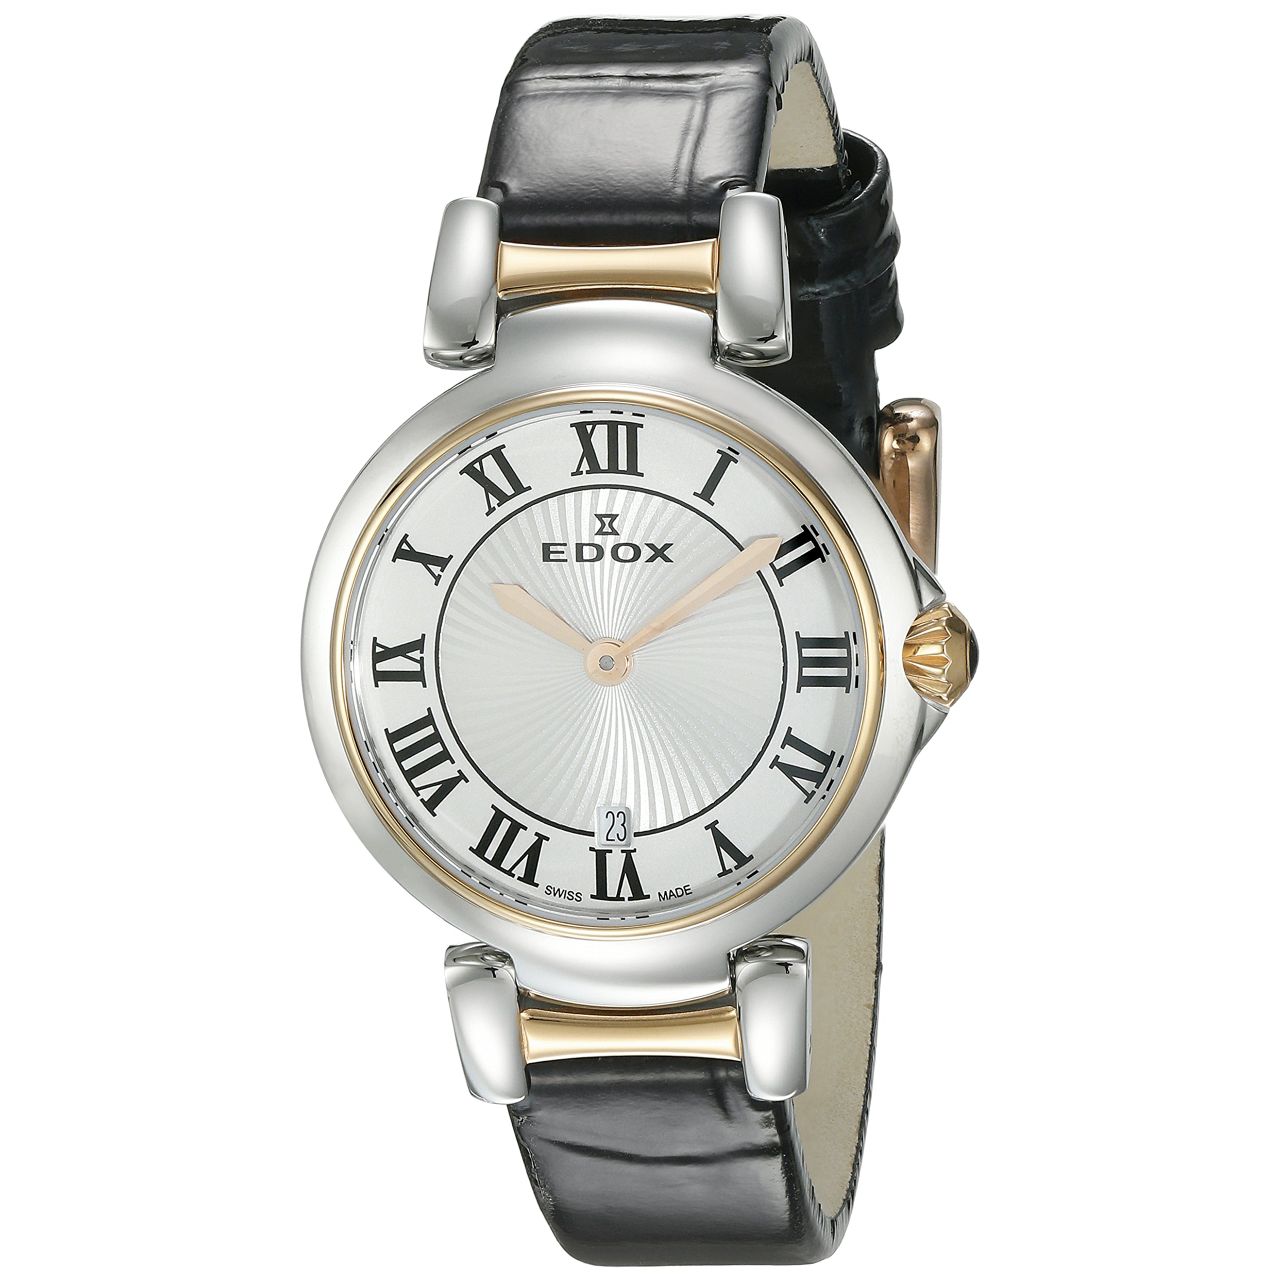 Edox 57002 357RC AR Womens Silver Dial Analog Quartz Watch with Leather Strap